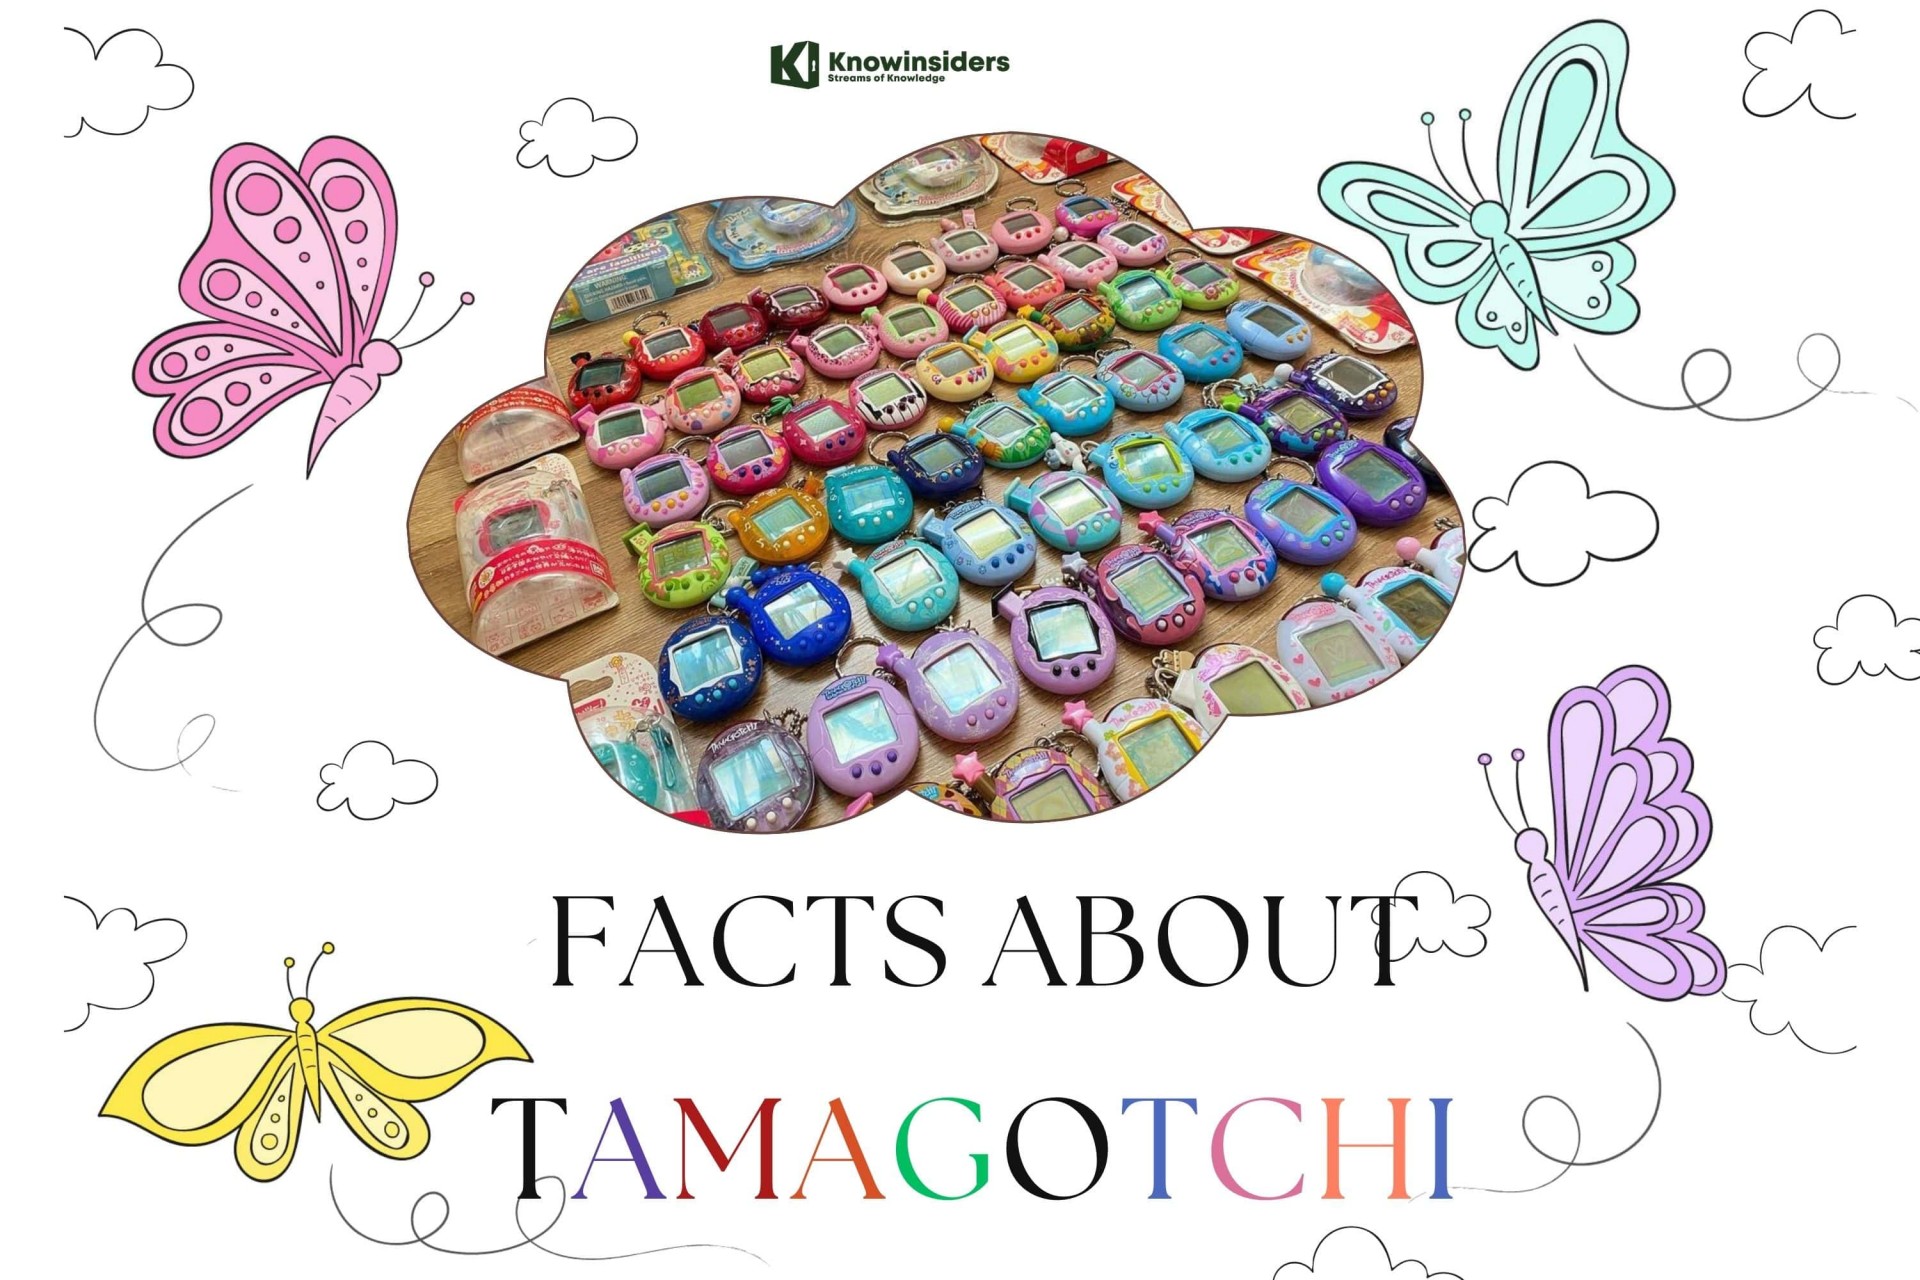 Interesting Facts About Tamagotchi - Japanese Handheld Game